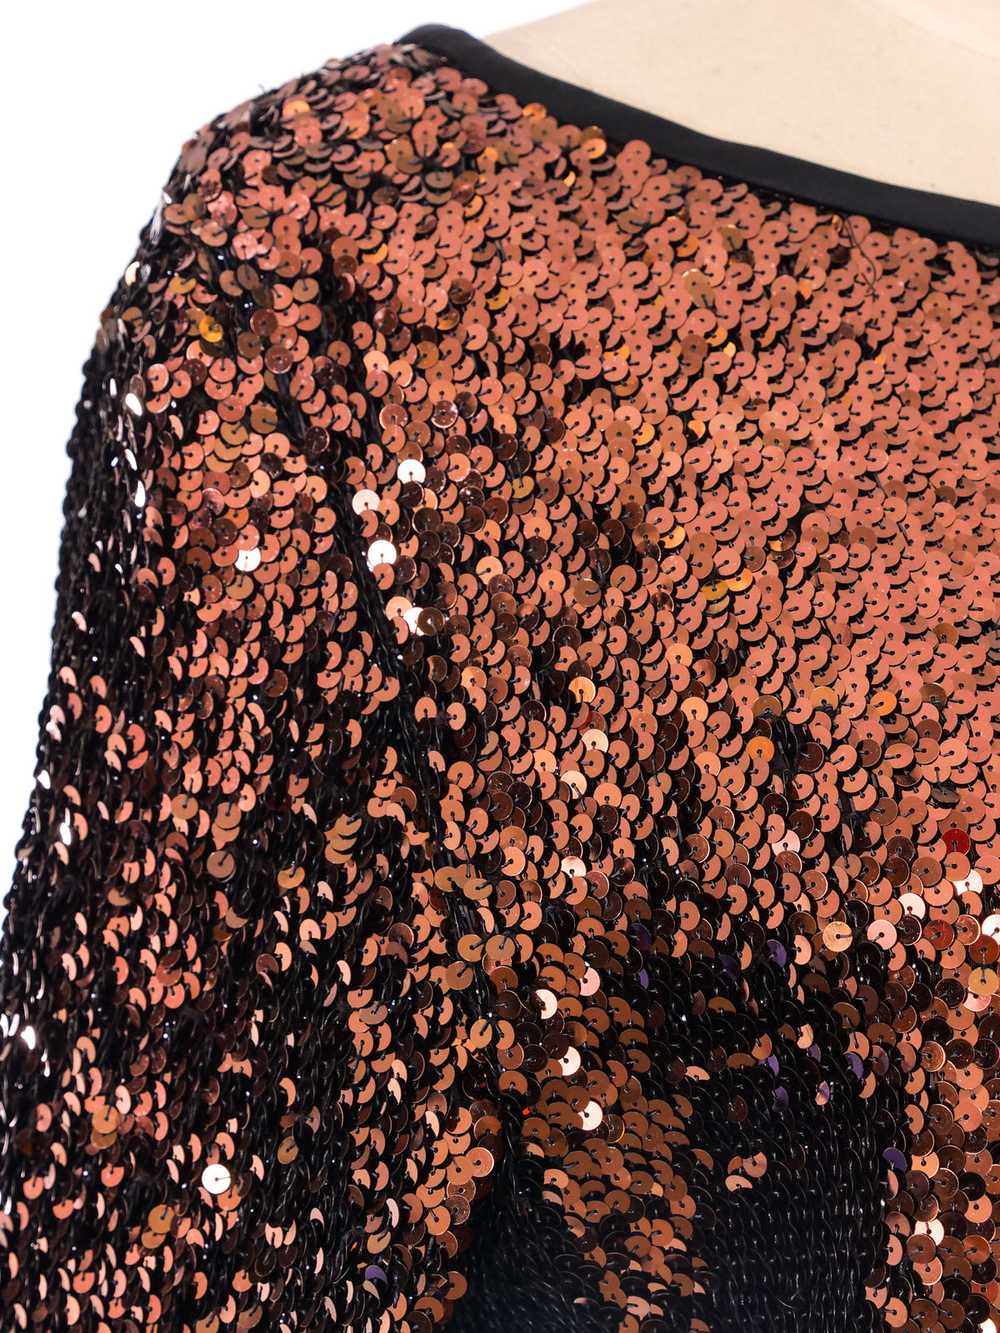 Yves Saint Laurent Copper Sequin Top - image 2